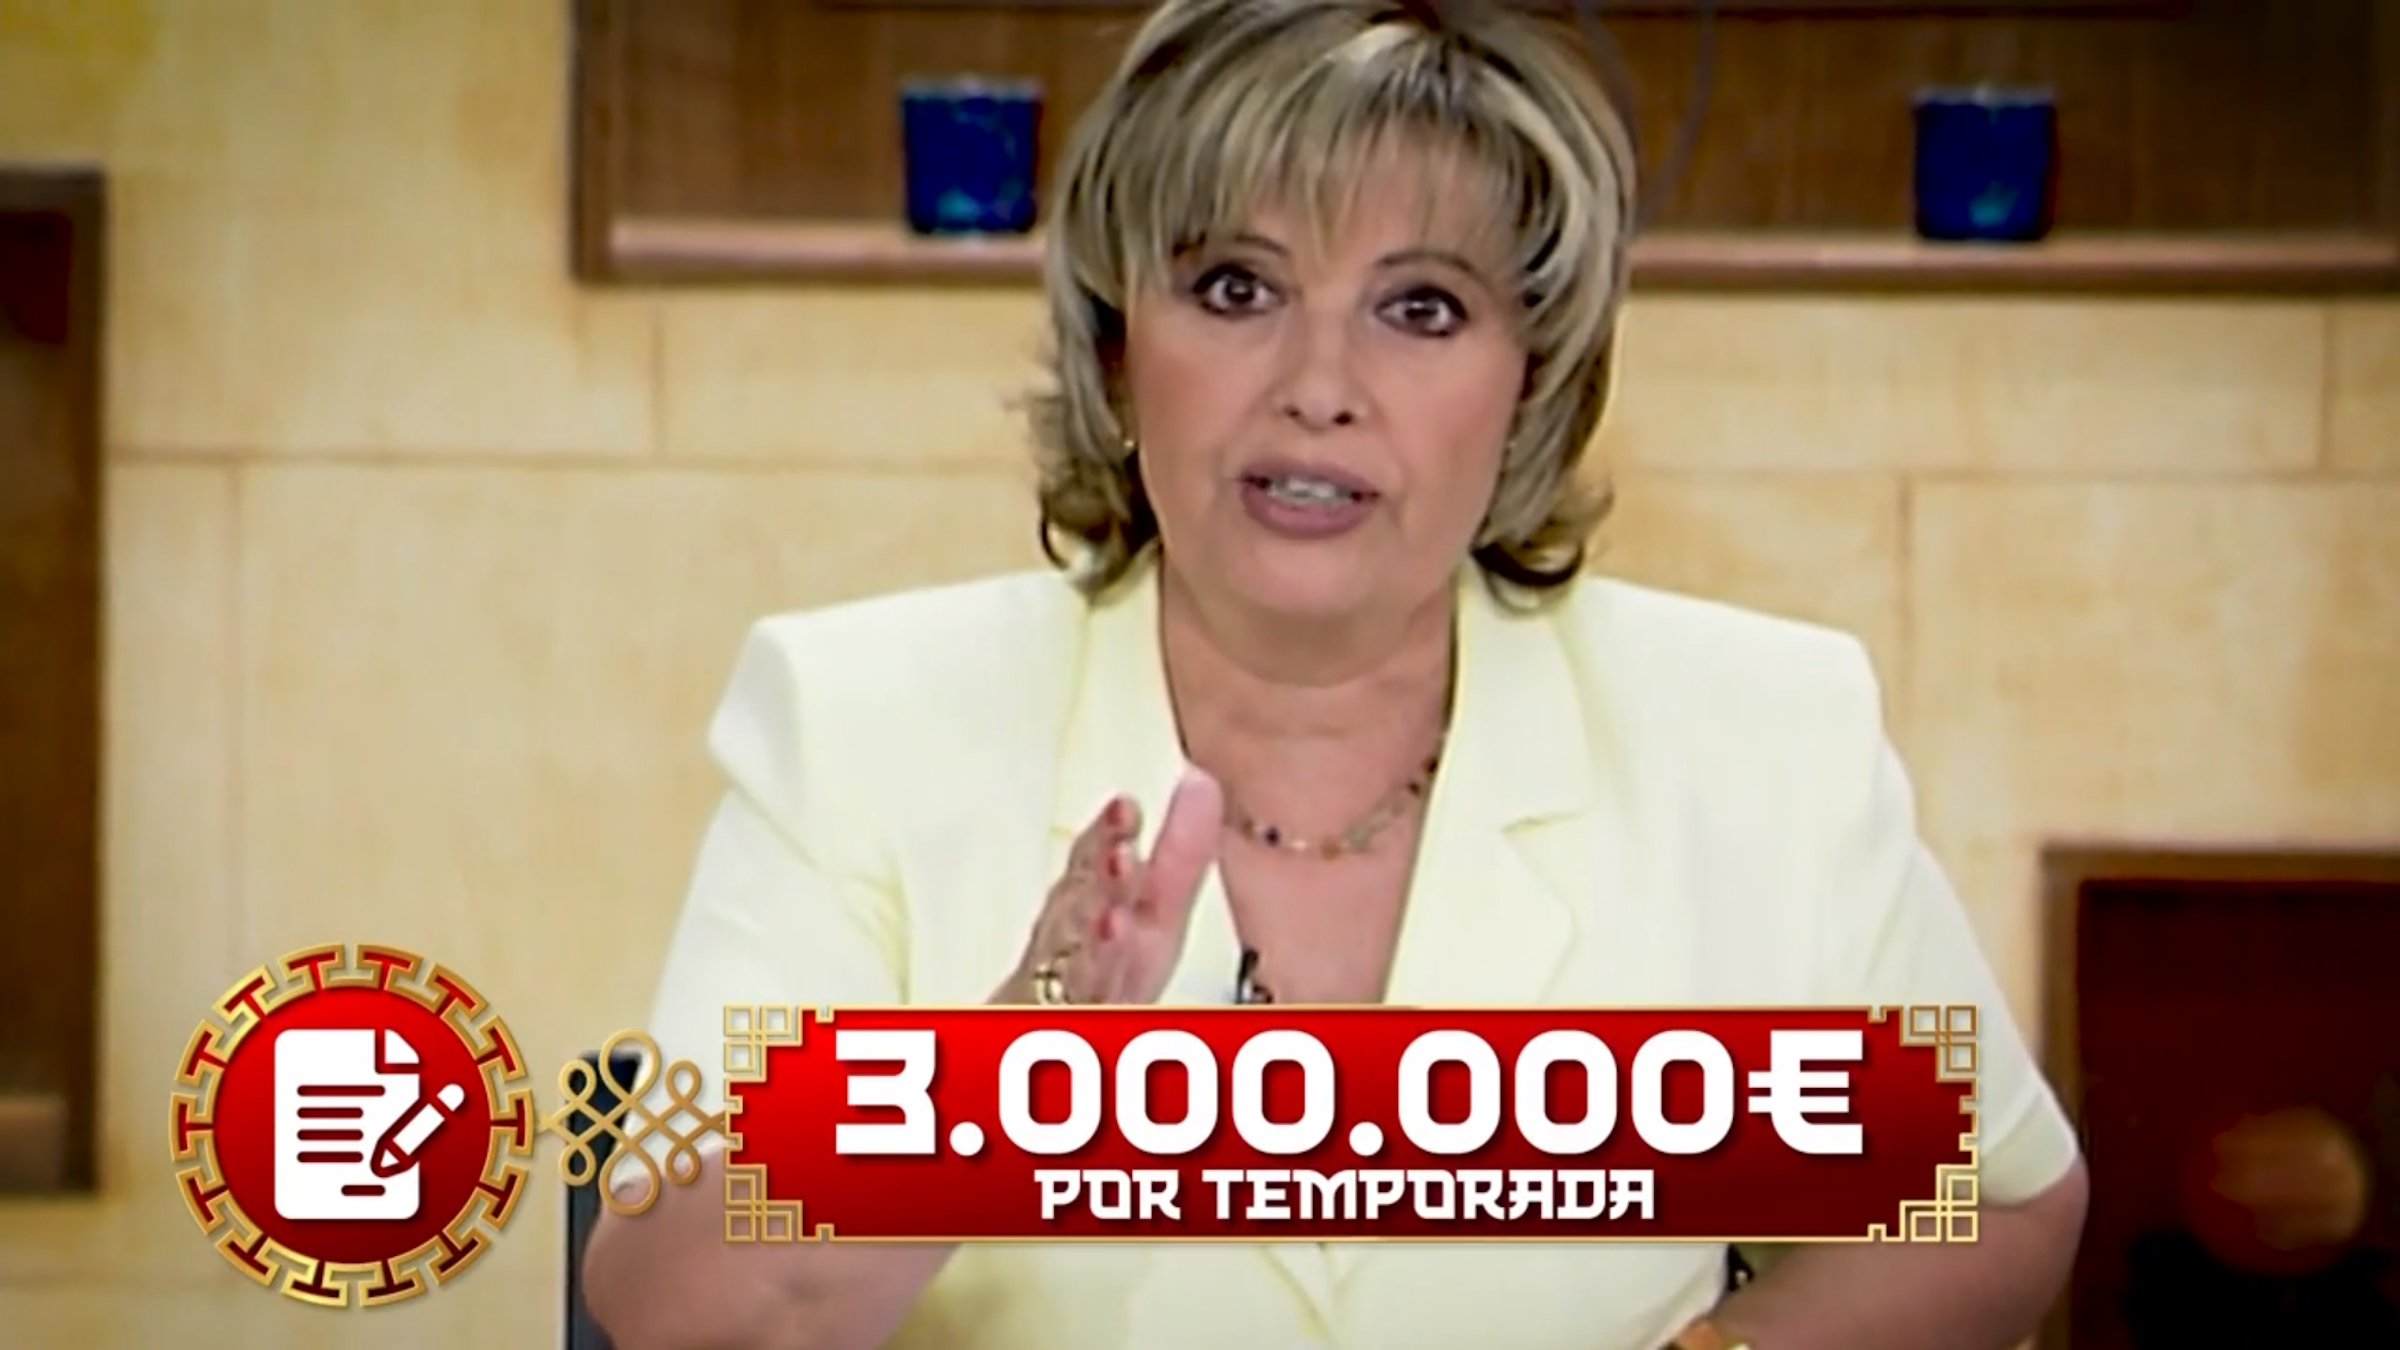 La fortuna malbaratada per María Teresa Campos, xifra increïble, vicis molt cars